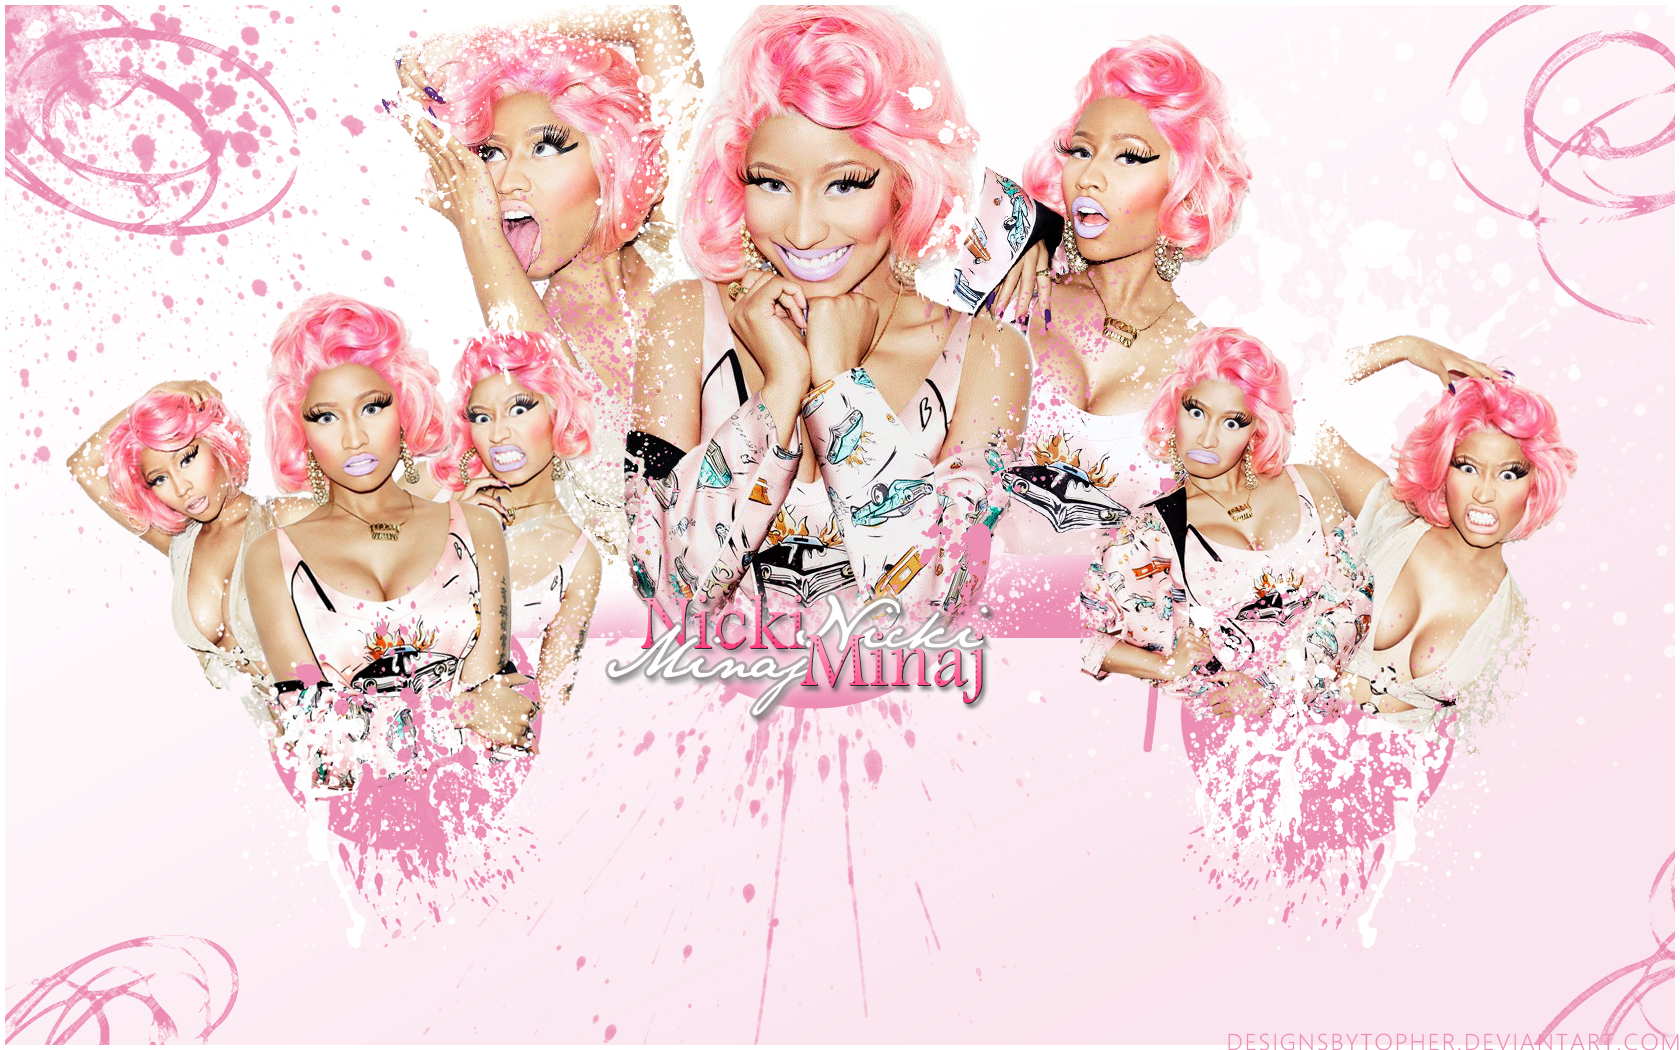 Nicki Minaj Wallpaper By Designsbytopher